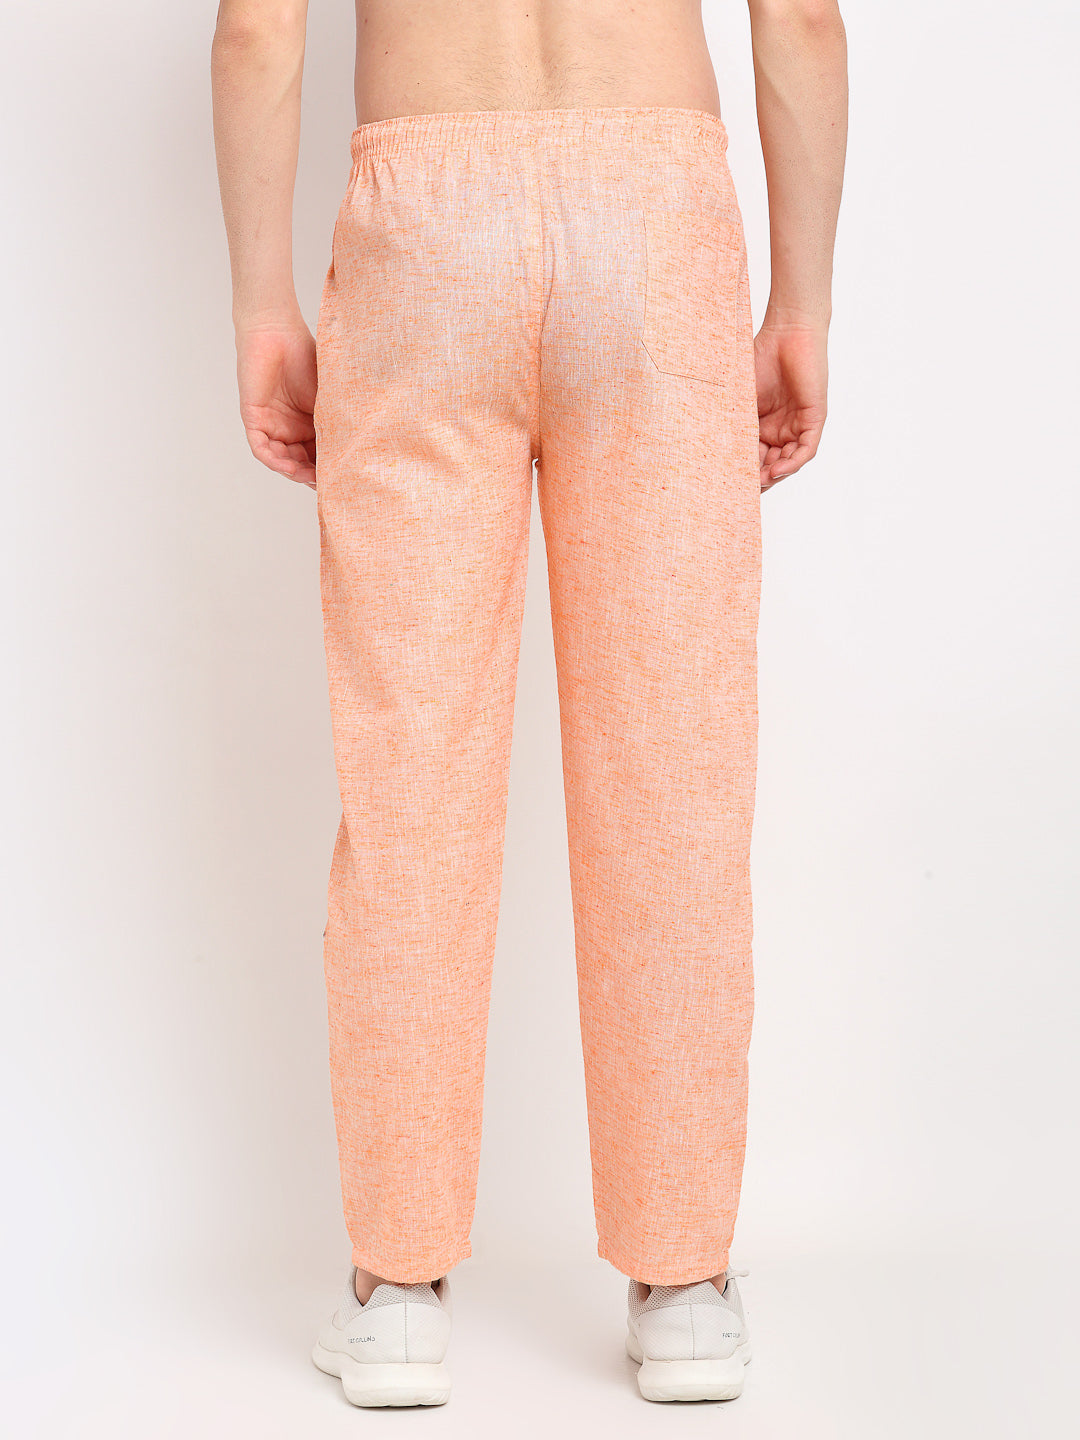 Jainish Men's Orange Linen Cotton Track Pants